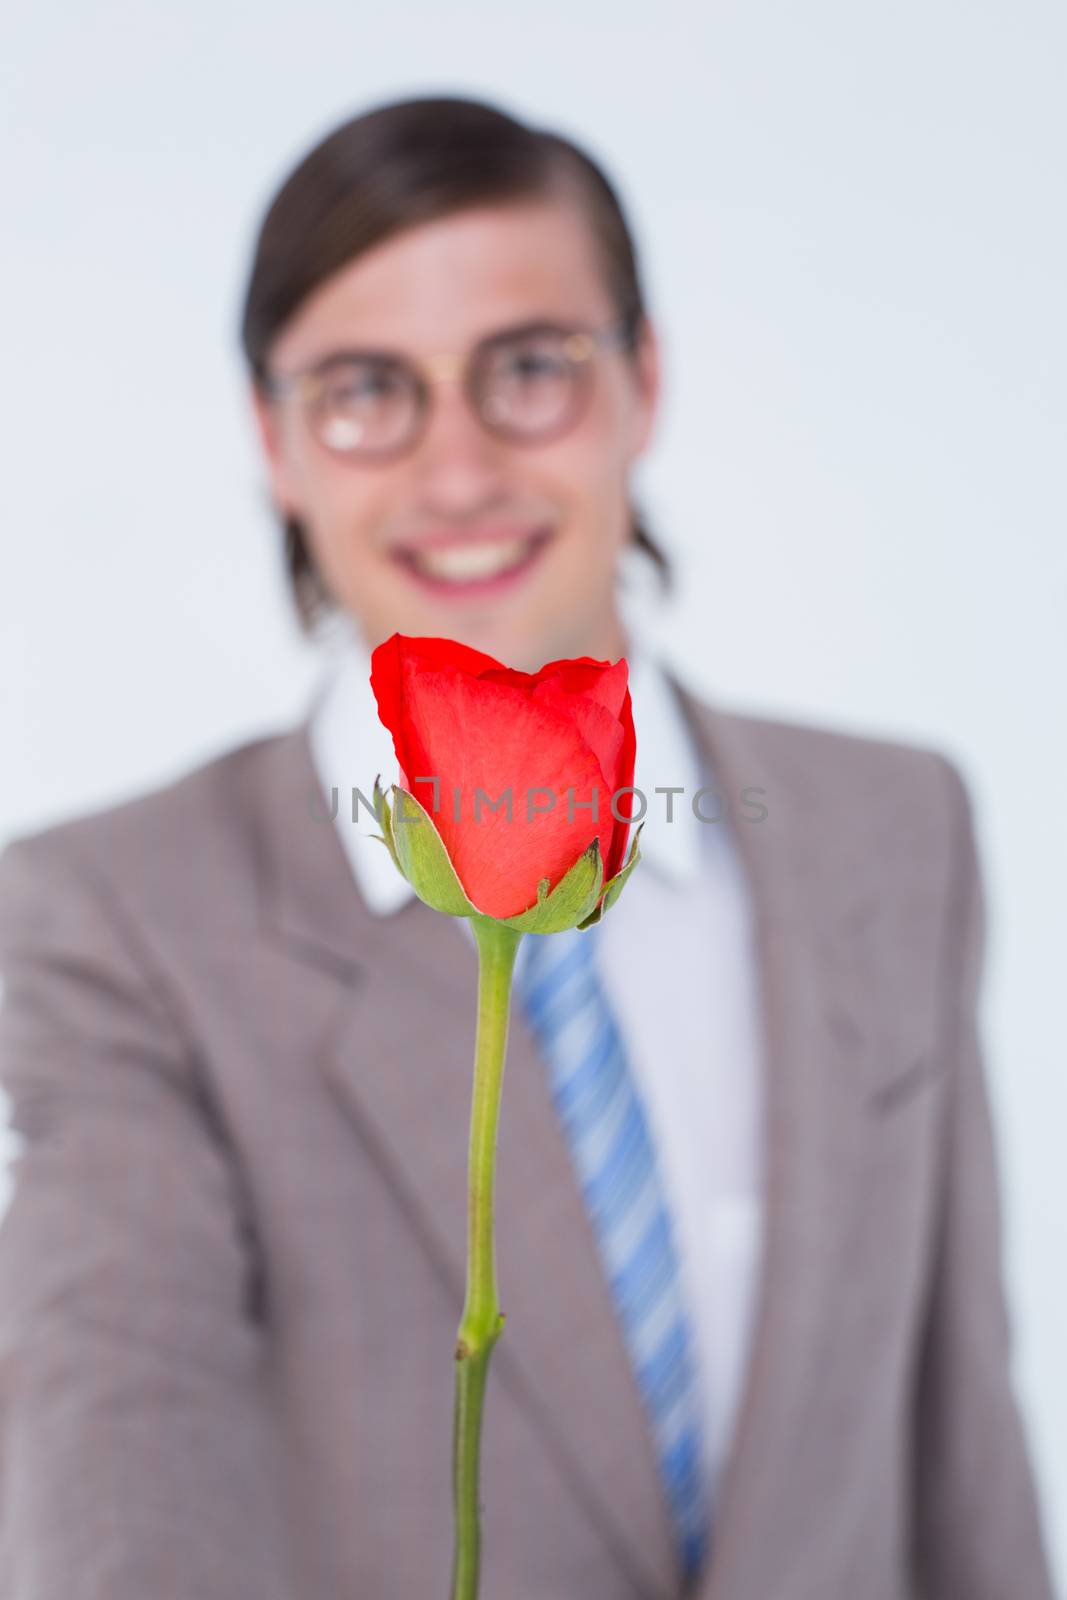 Geeky businessman offering a rose by Wavebreakmedia